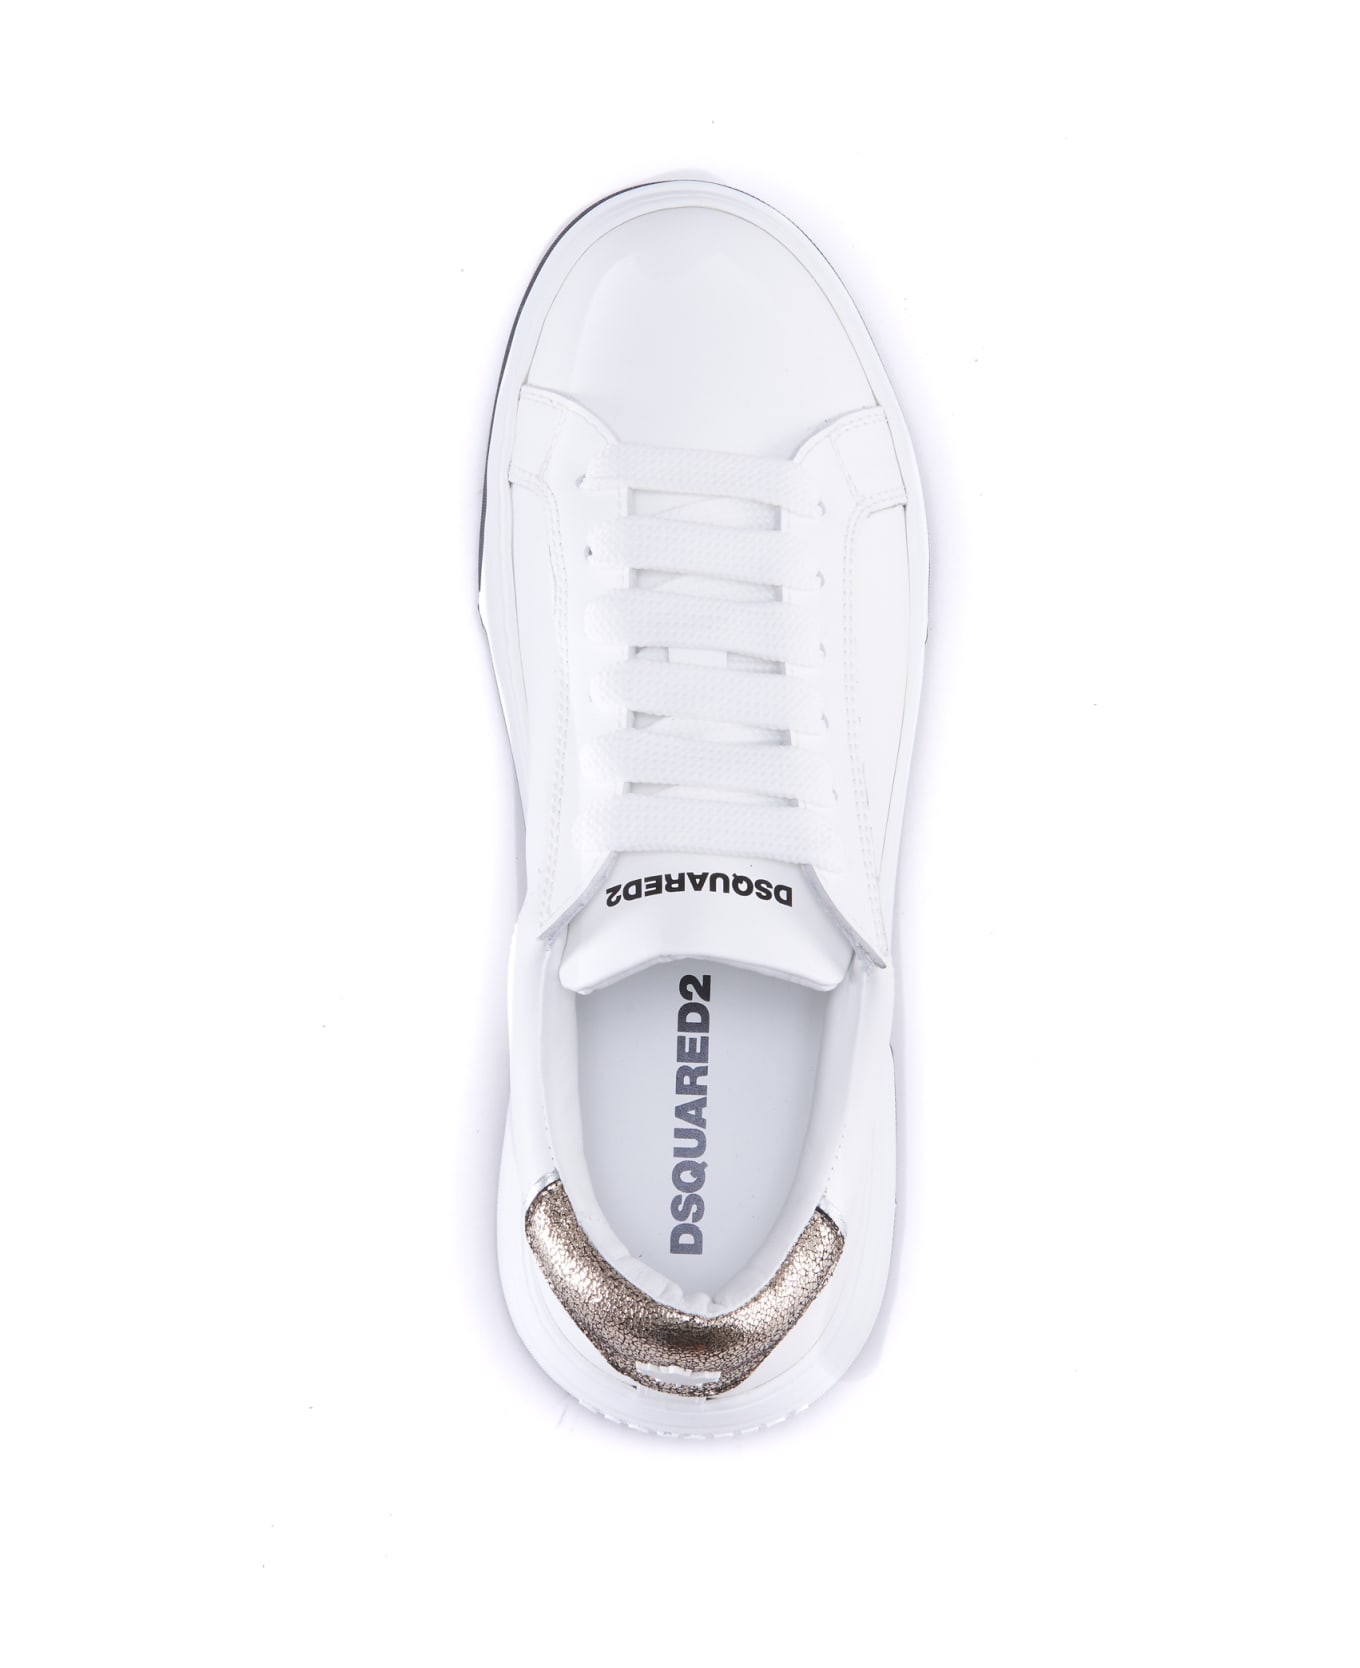 Dsquared2 Bumper Sneakers - White/Gold